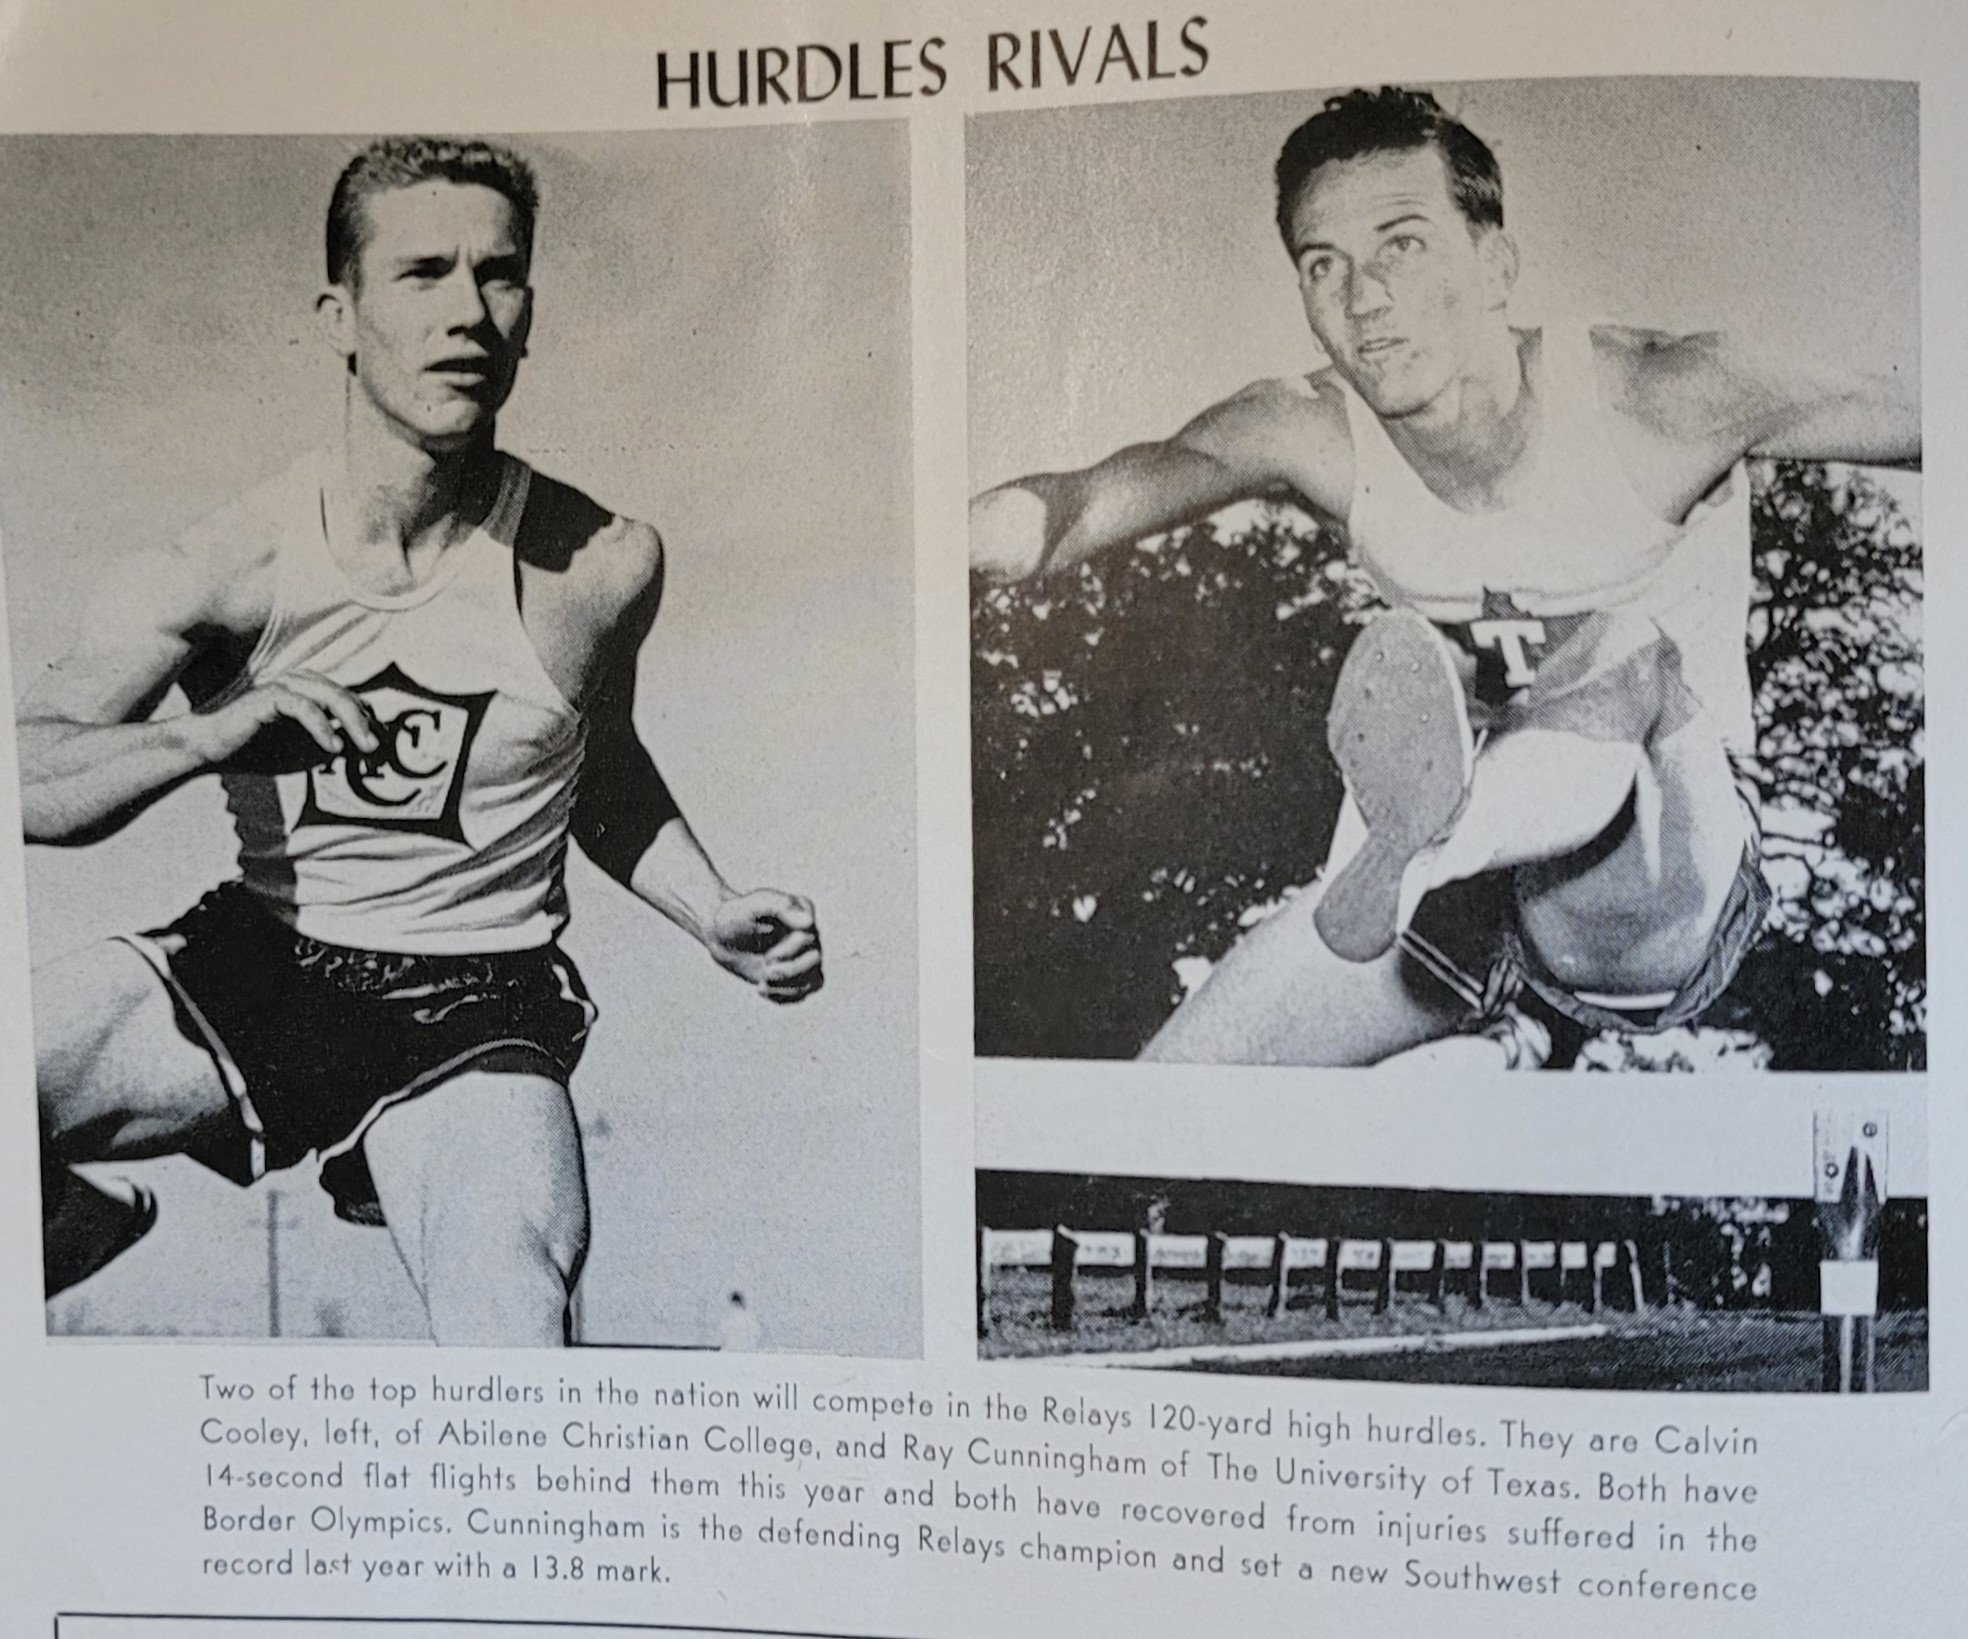  1962 Texas relays  Ray Cunningham  (2).jpg 